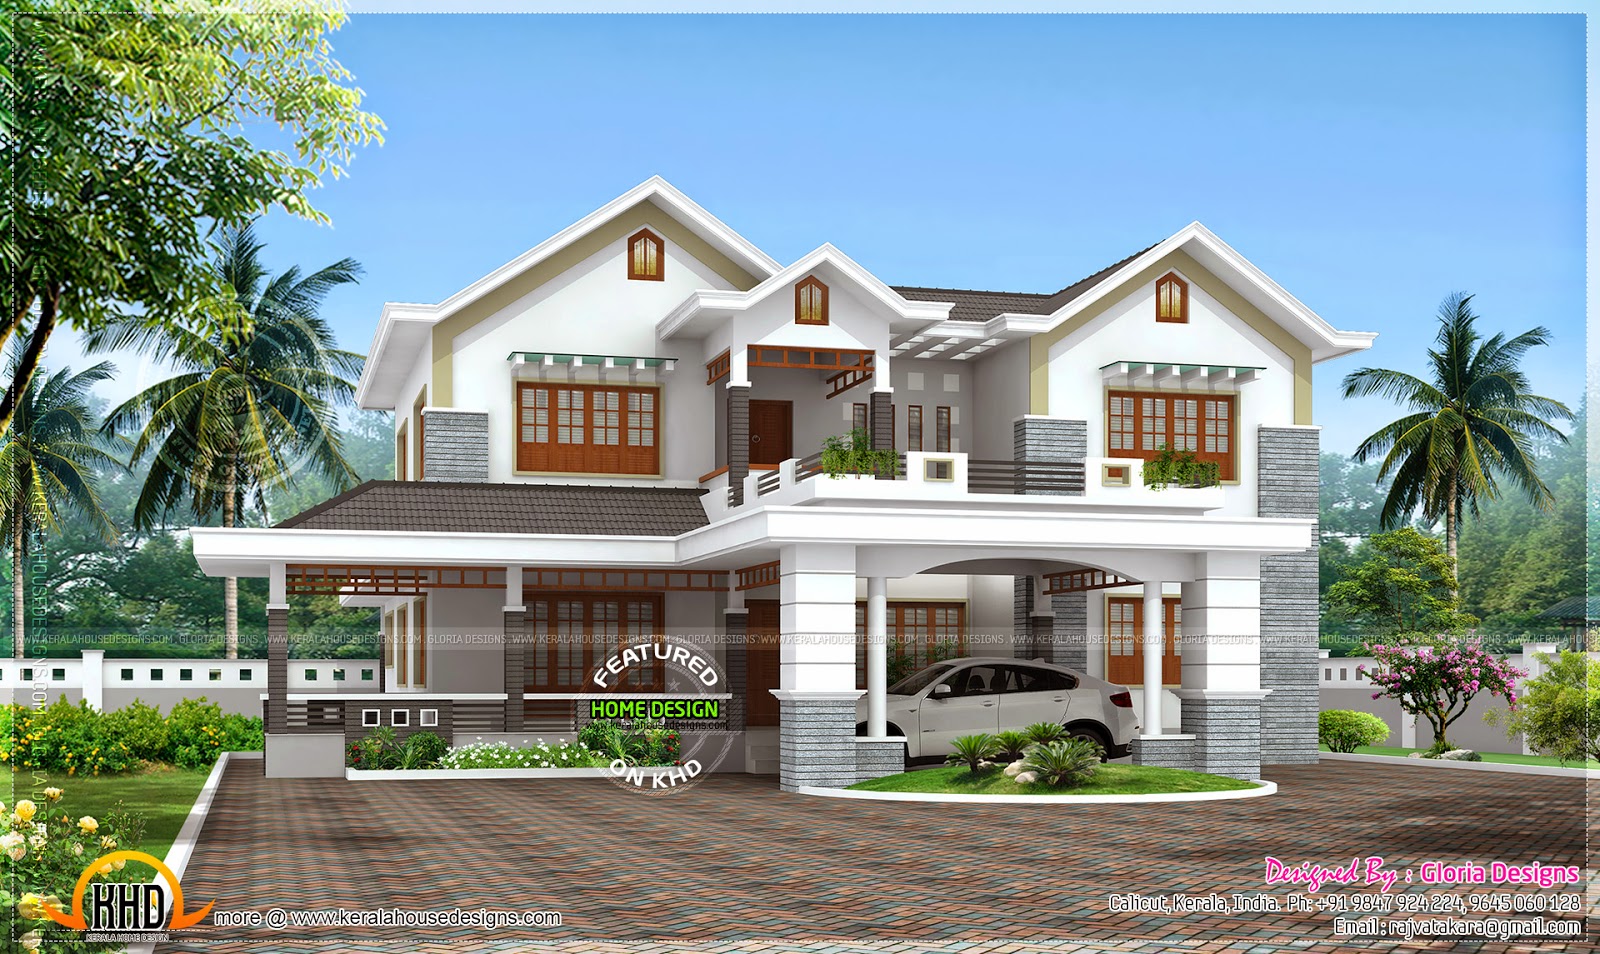  Beautiful  4 bedroom modern  house  Home  Kerala Plans 